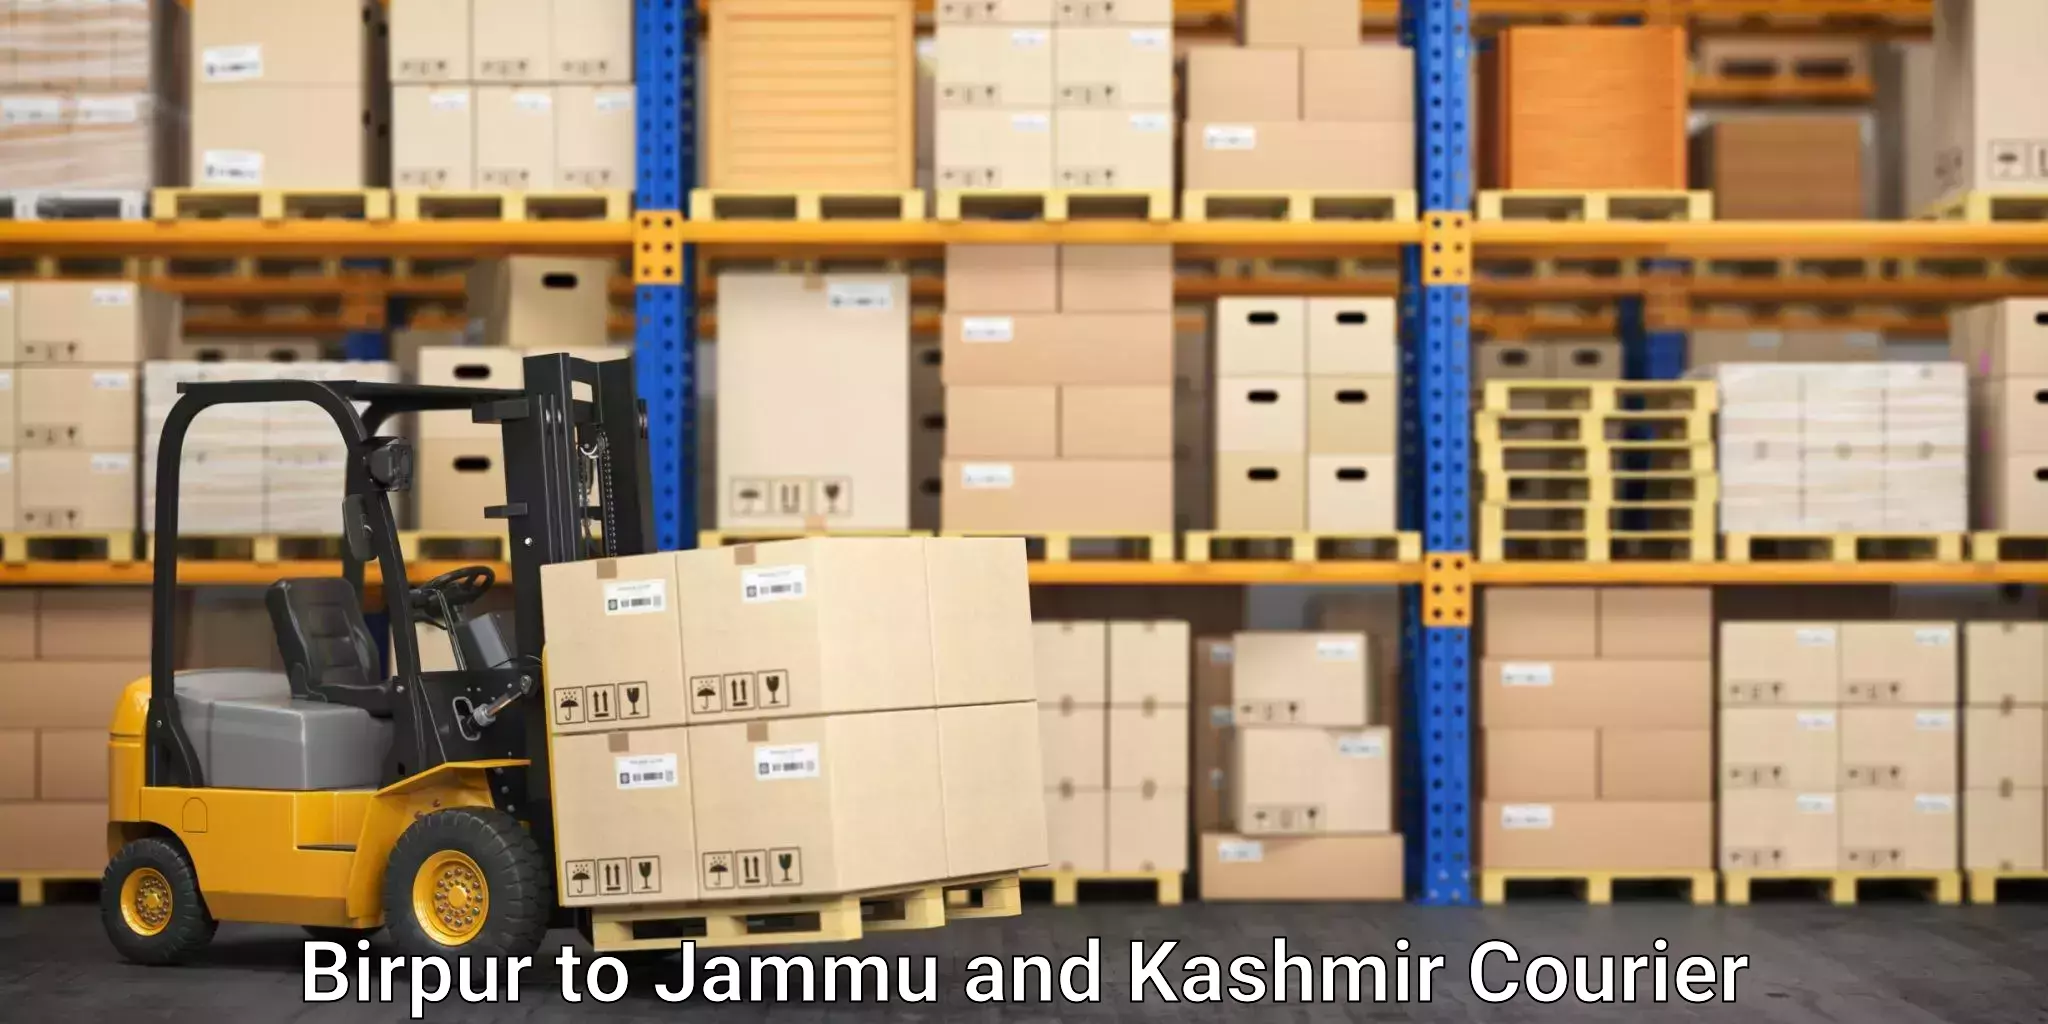 Household moving and storage Birpur to Srinagar Kashmir